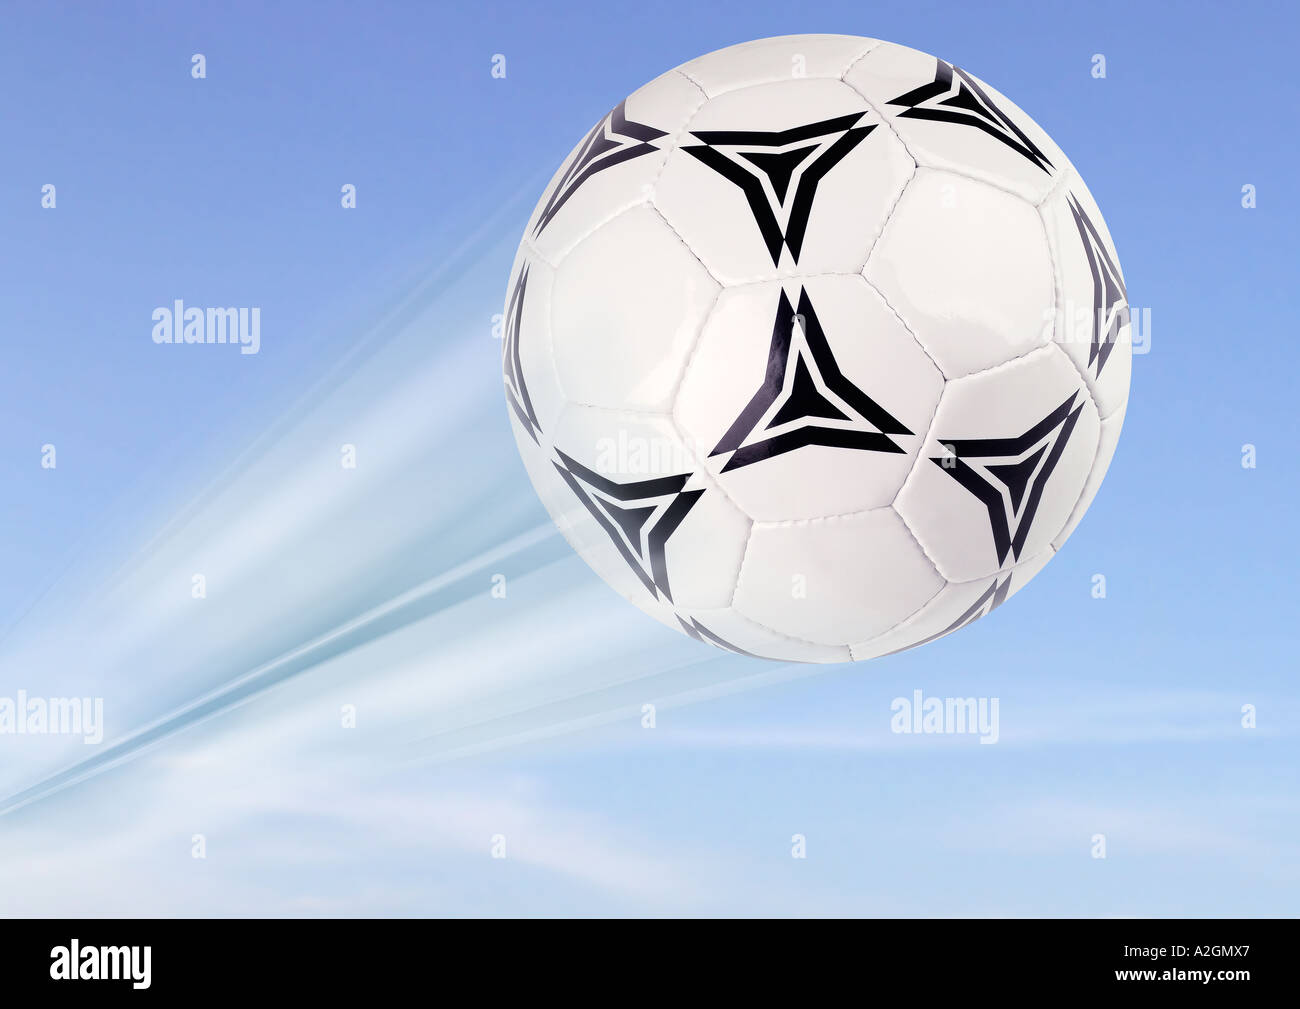 Fußball soccer ball Stock Photo